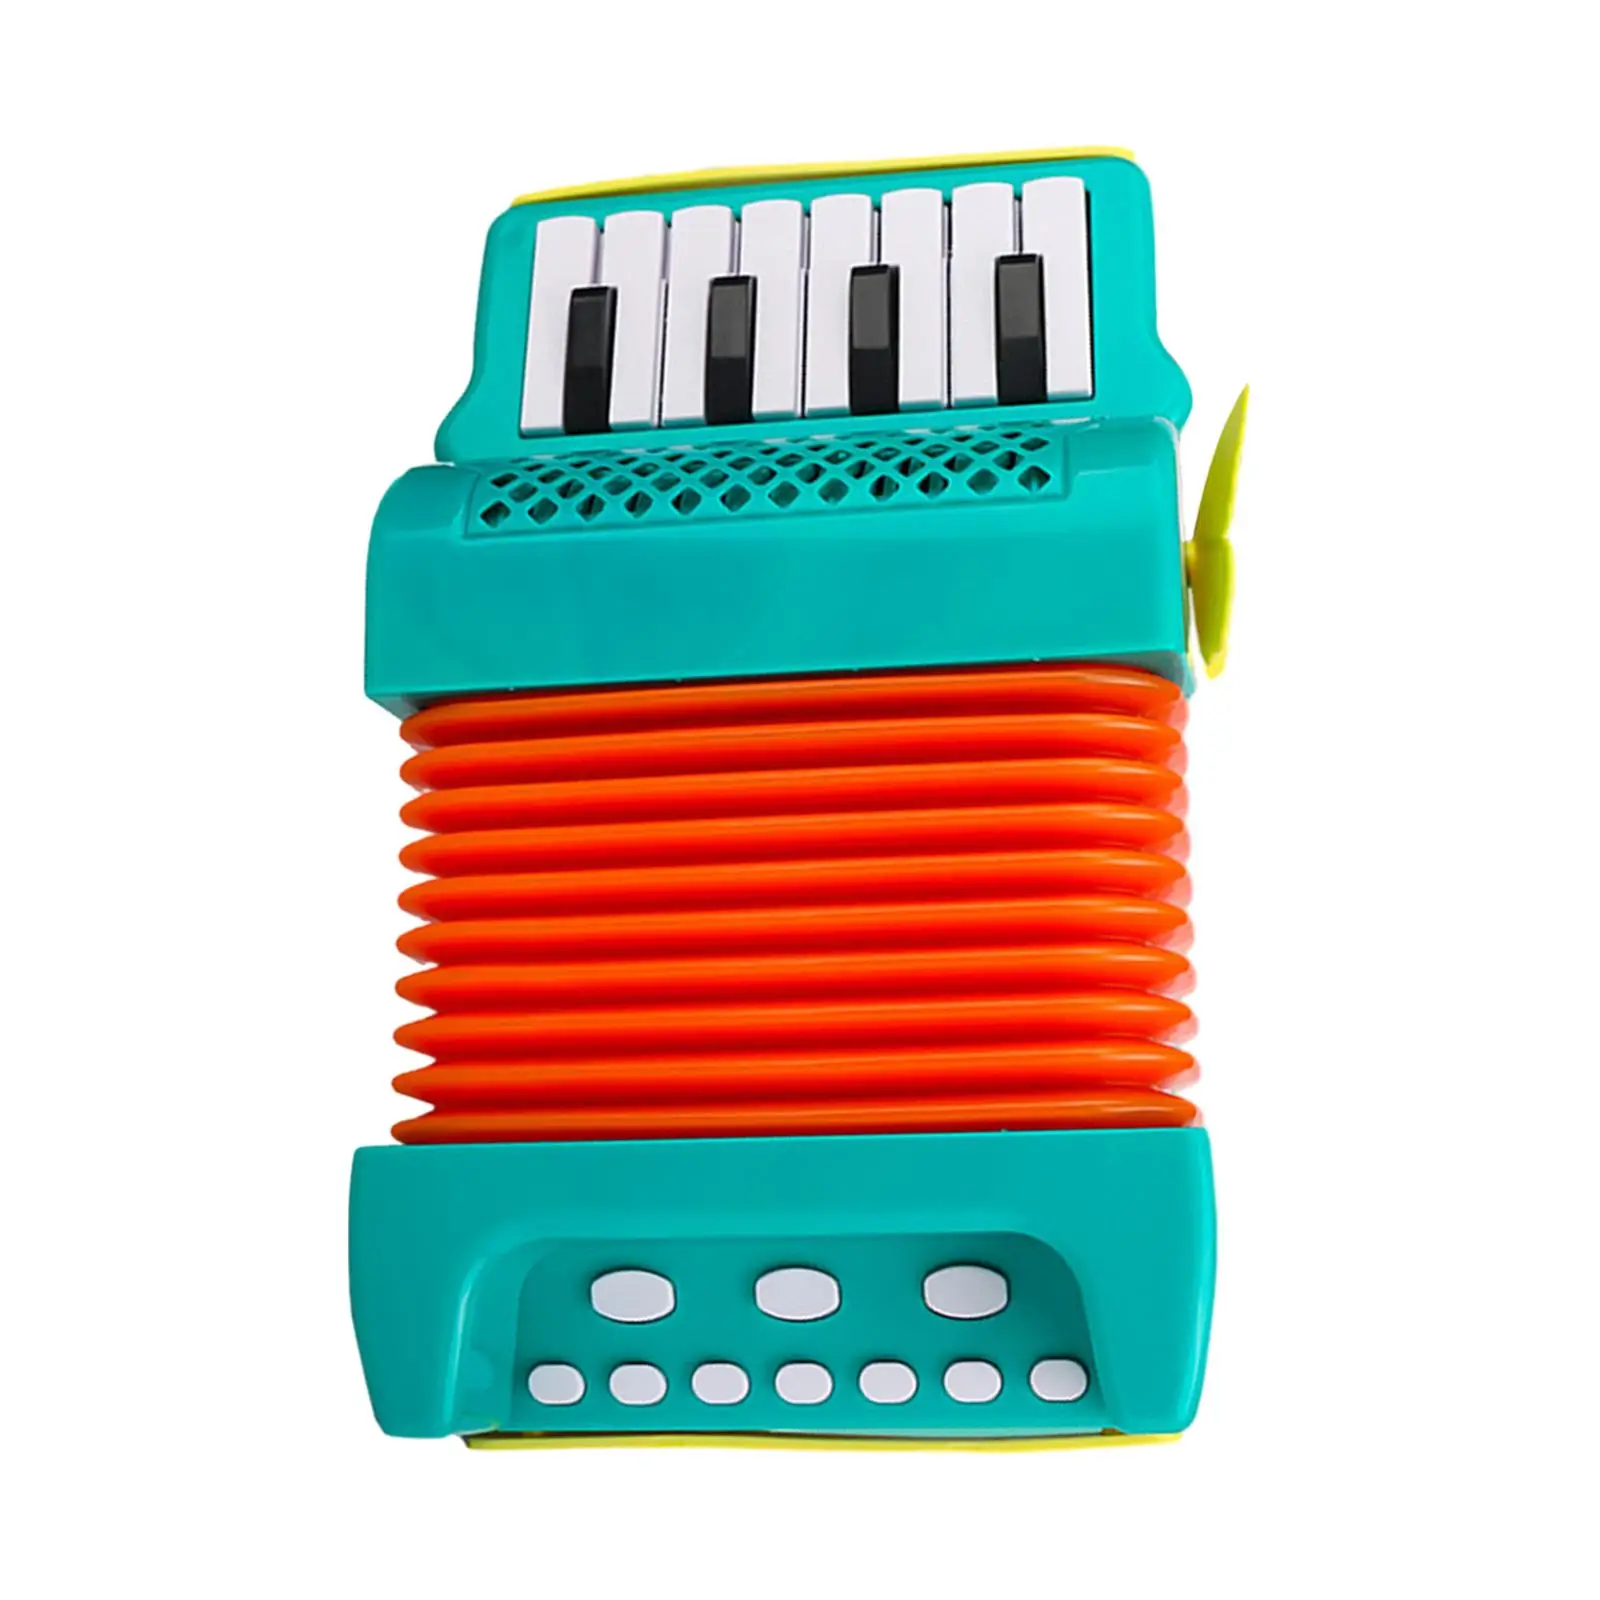 10 Keys 8 Bass Piano Accordion Kids Accordion Toy for Boys Girls Beginner